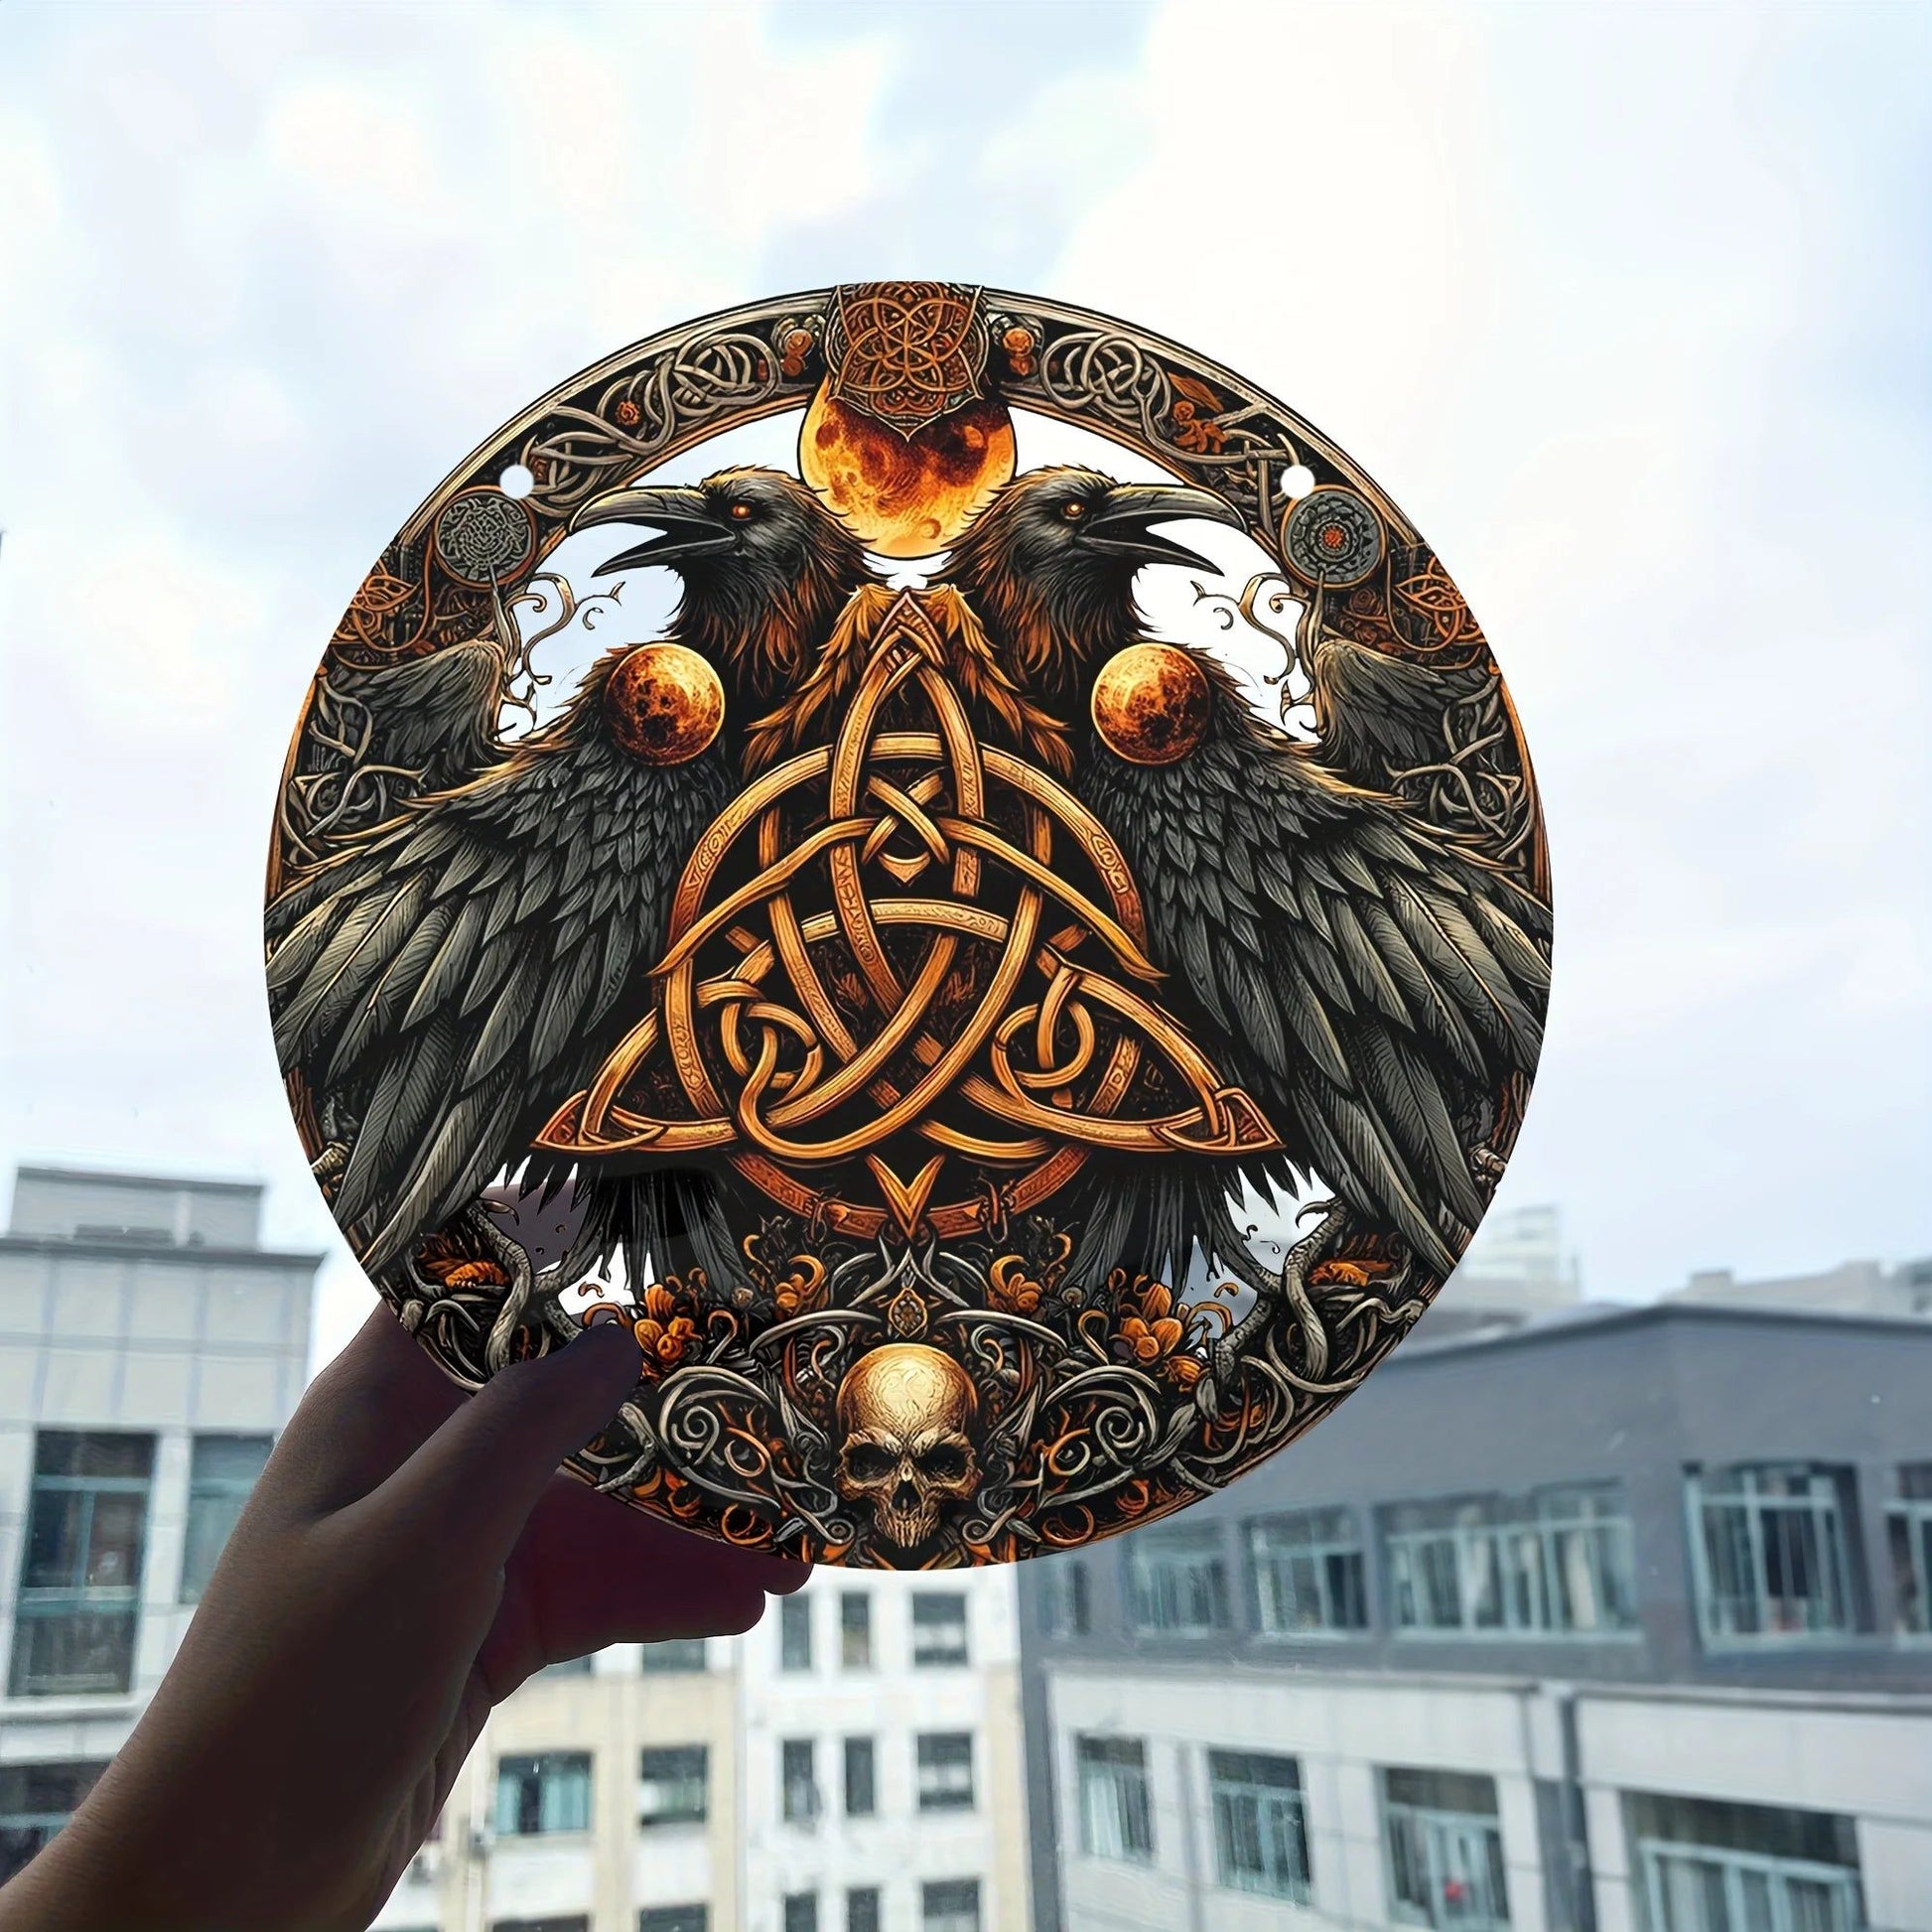 Celtic Dark Crow Suncatcher Black Raven Witchy Acrylic Round Sign Halloween Decor-MoonChildWorld